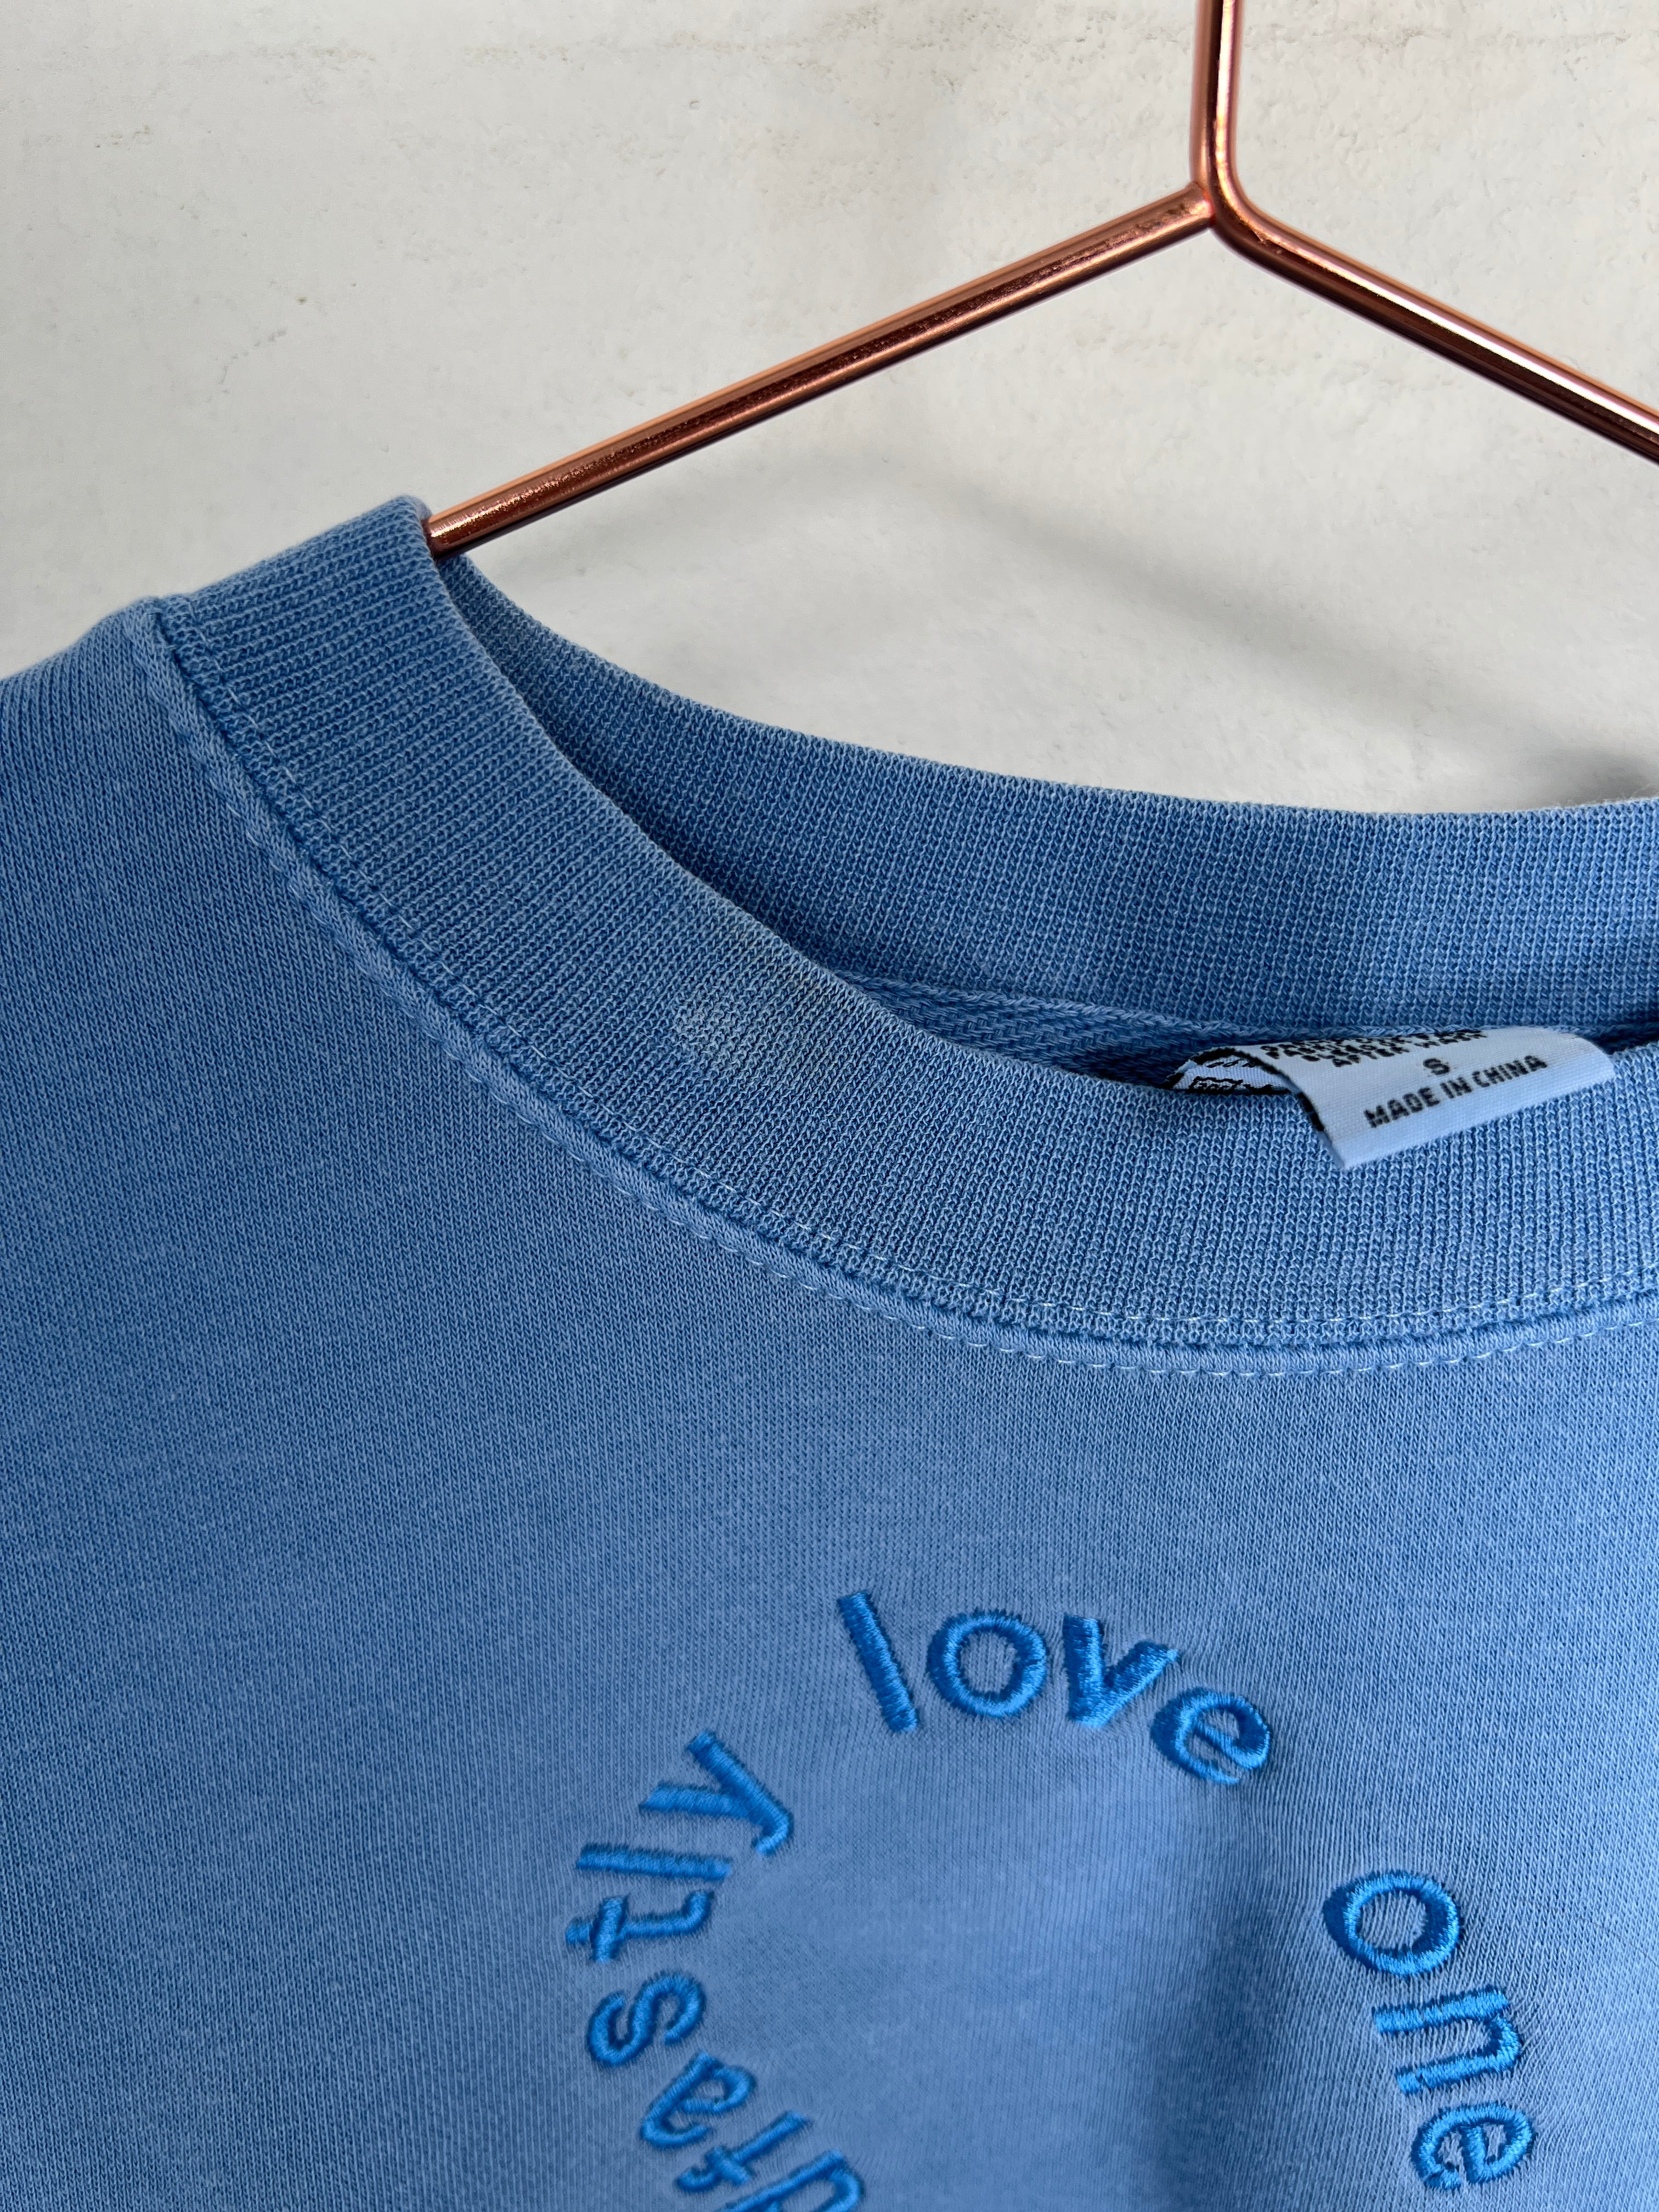 Swirly Motto  'Let Us Steadfastly Love One Another' Crewneck Sweatshirt - Delta Delta Delta - size S